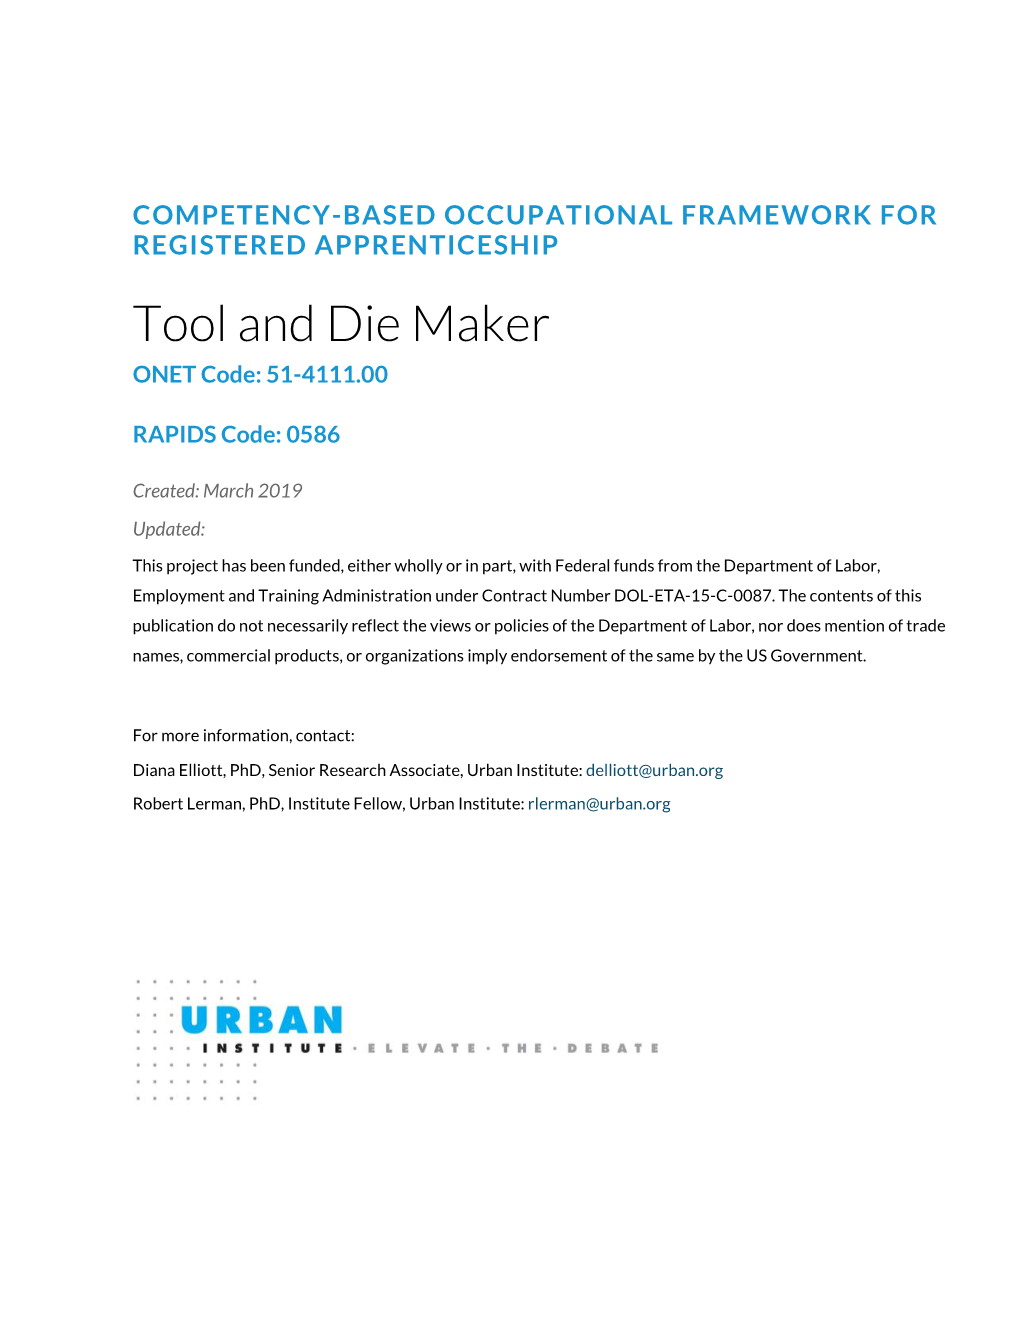 Tool and Die Maker ONET Code: 51-4111.00